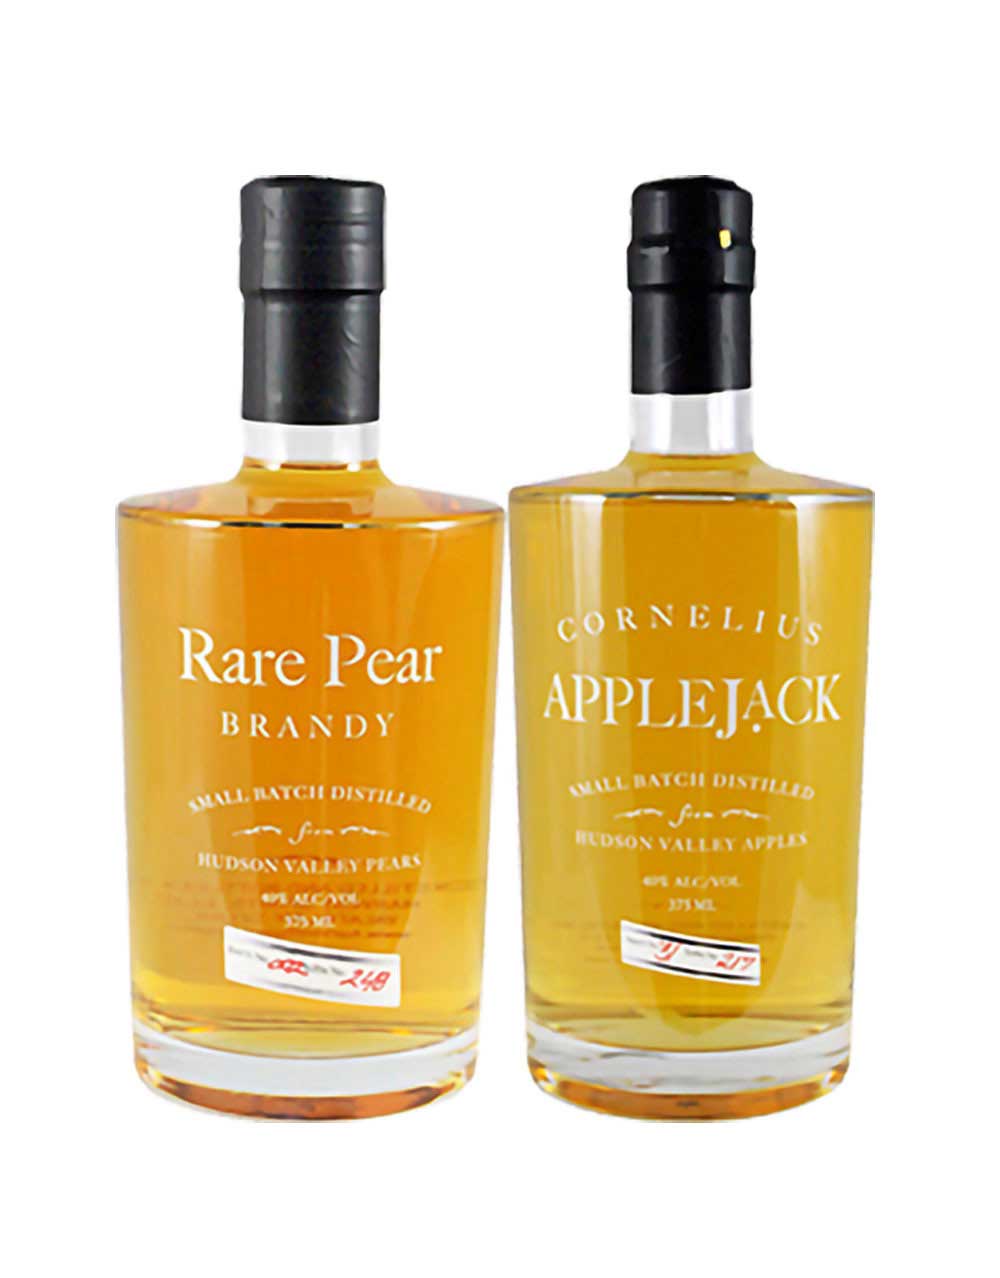 Cornelius Applejack & Rare Pear Brandy Duo 375mL